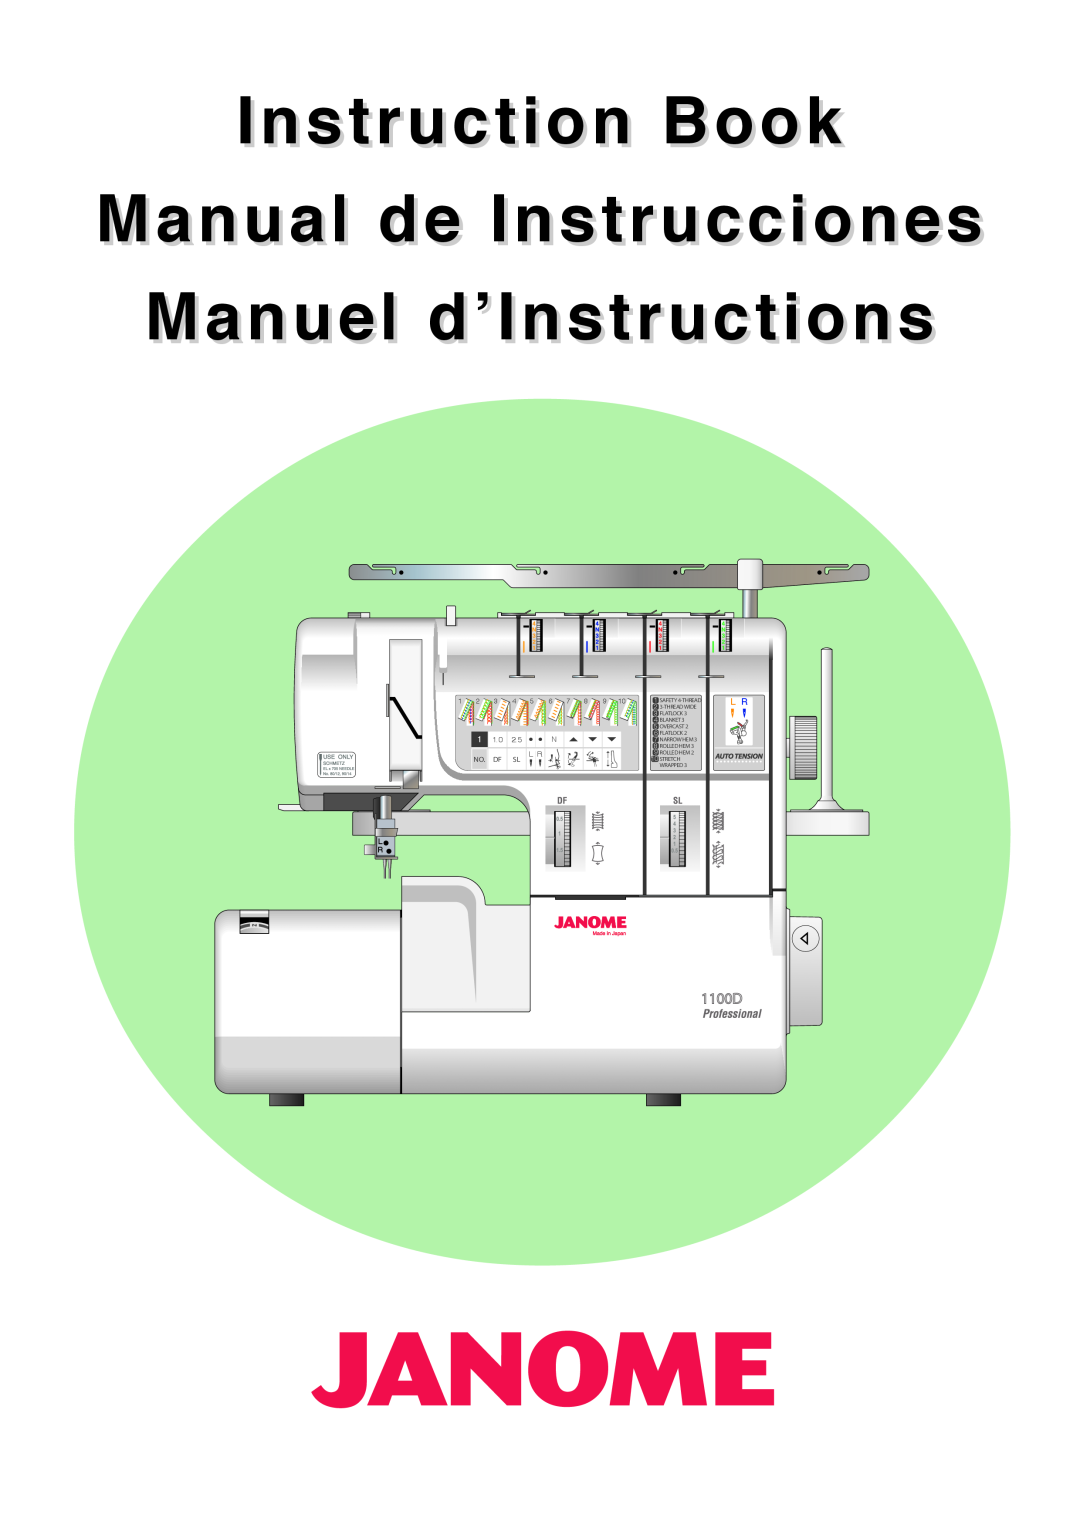 Janome 1100D Professional manual Instruction Book Manual de Instrucciones Manuel dʼInstructions, 1 1.0, L R No. Df Sl 